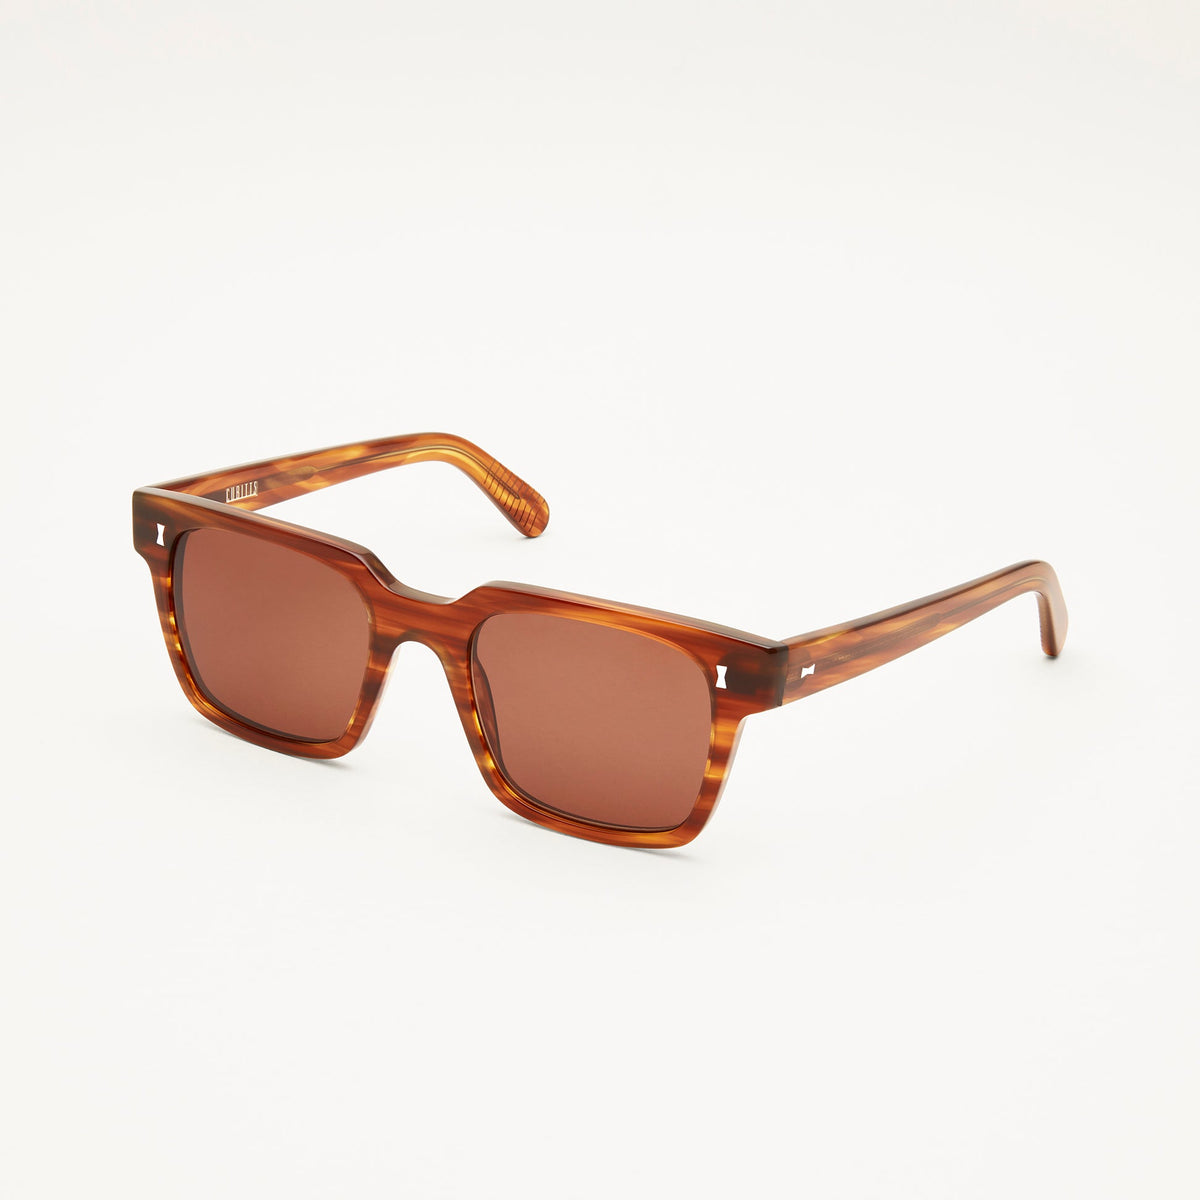 Beechwood Cubitts Panton sunglasses